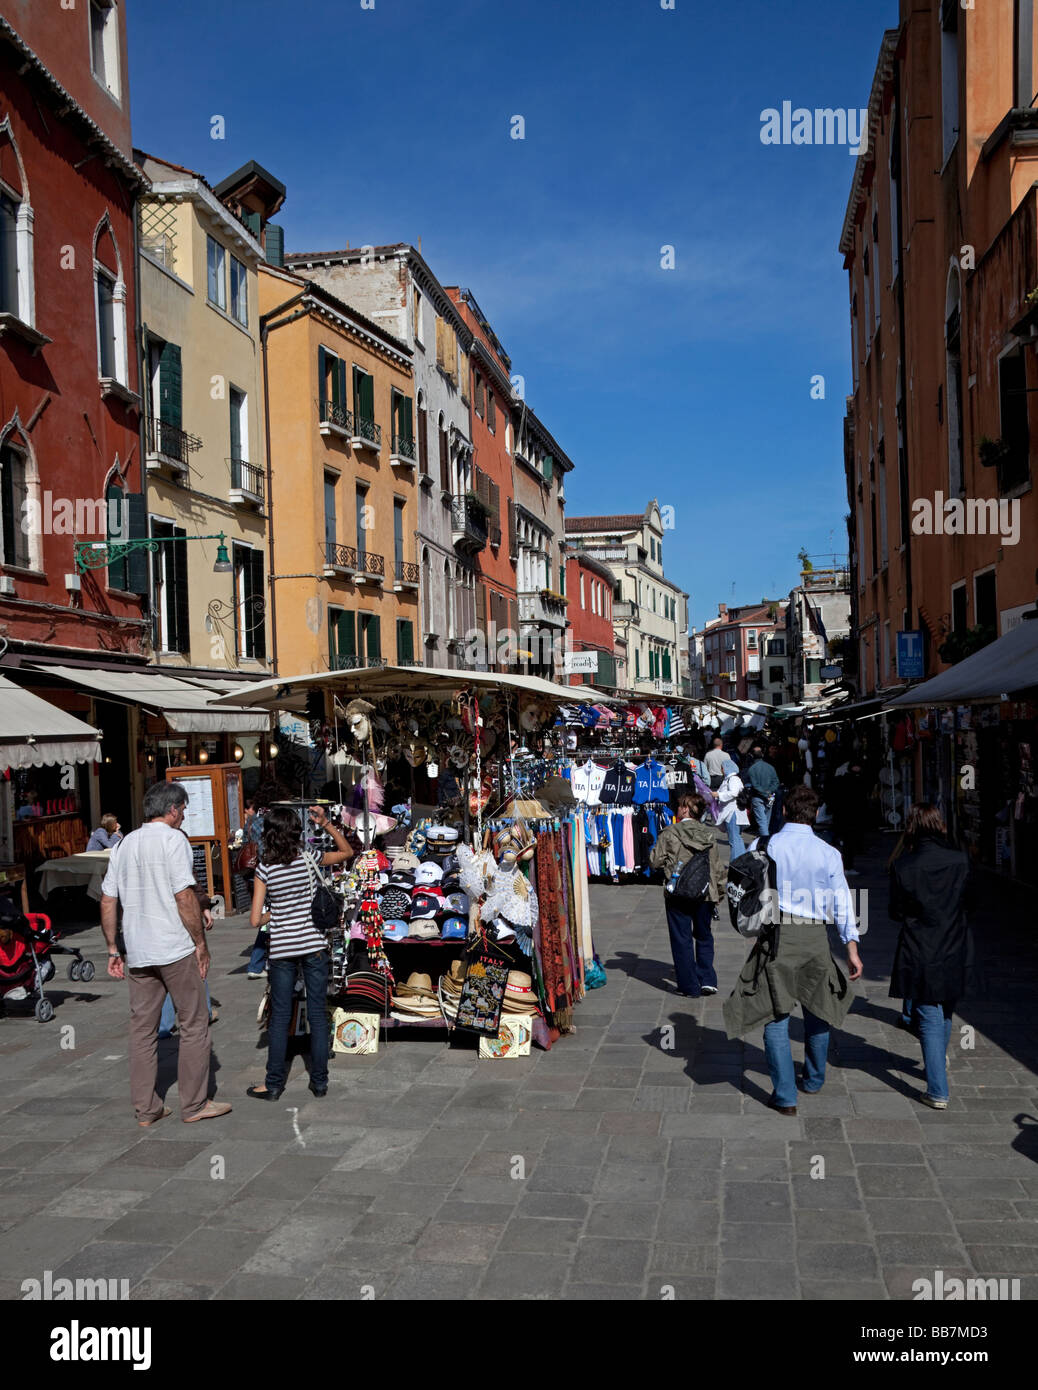 Stall in shopping street, Venice, Italy Stock Photo